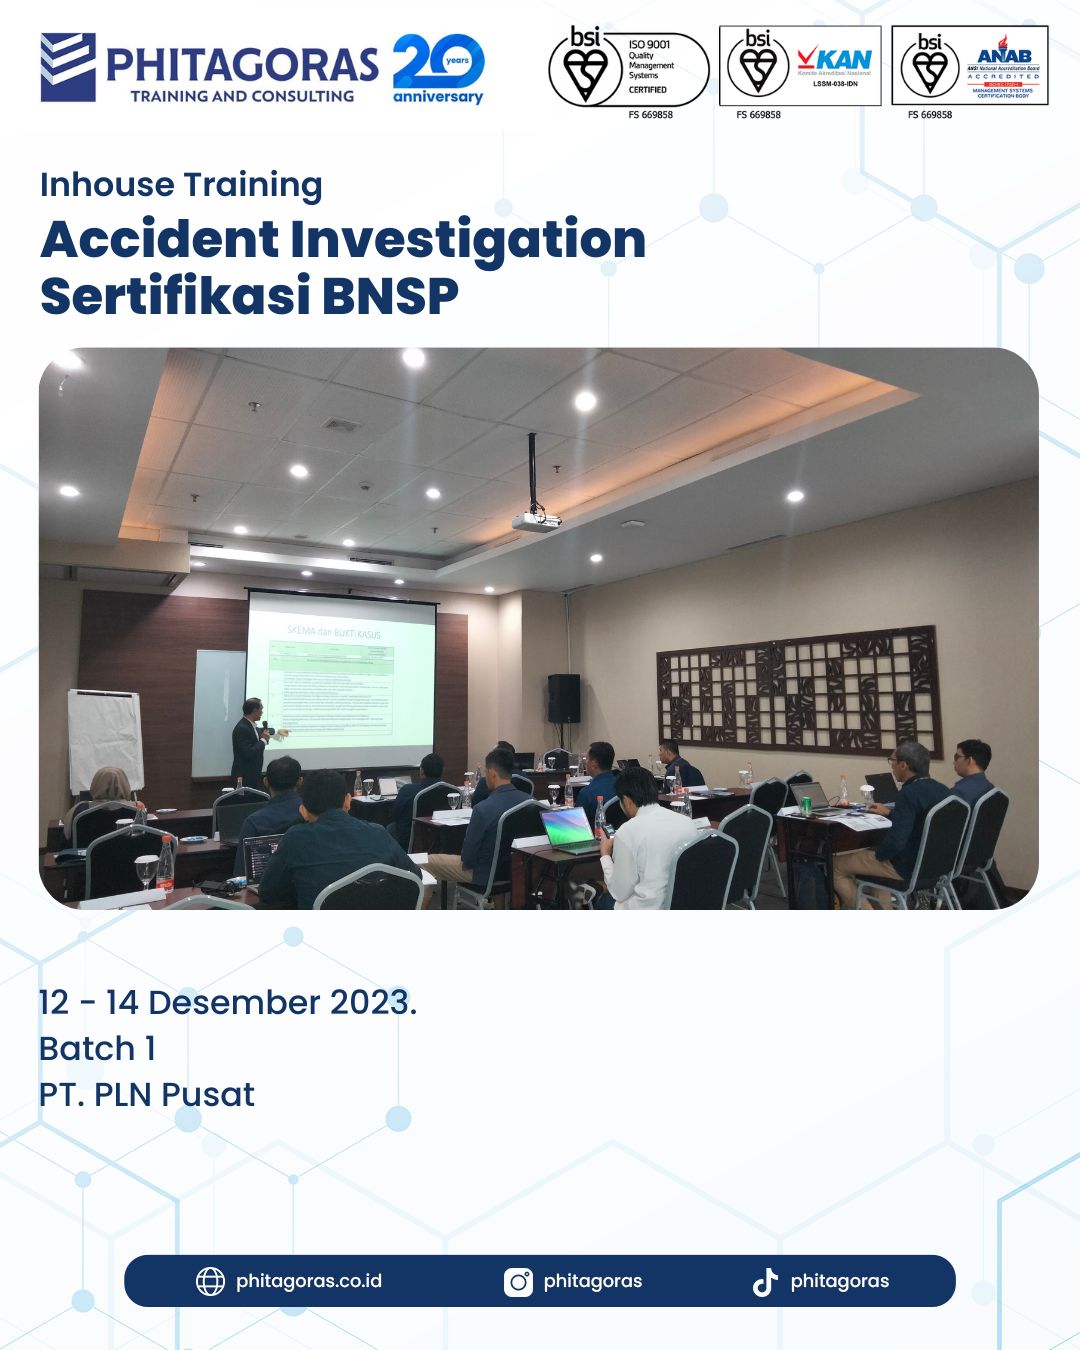 Inhouse Training Accident Investigation Sertifikasi BNSP - PT. PLN Pusat Batch 1